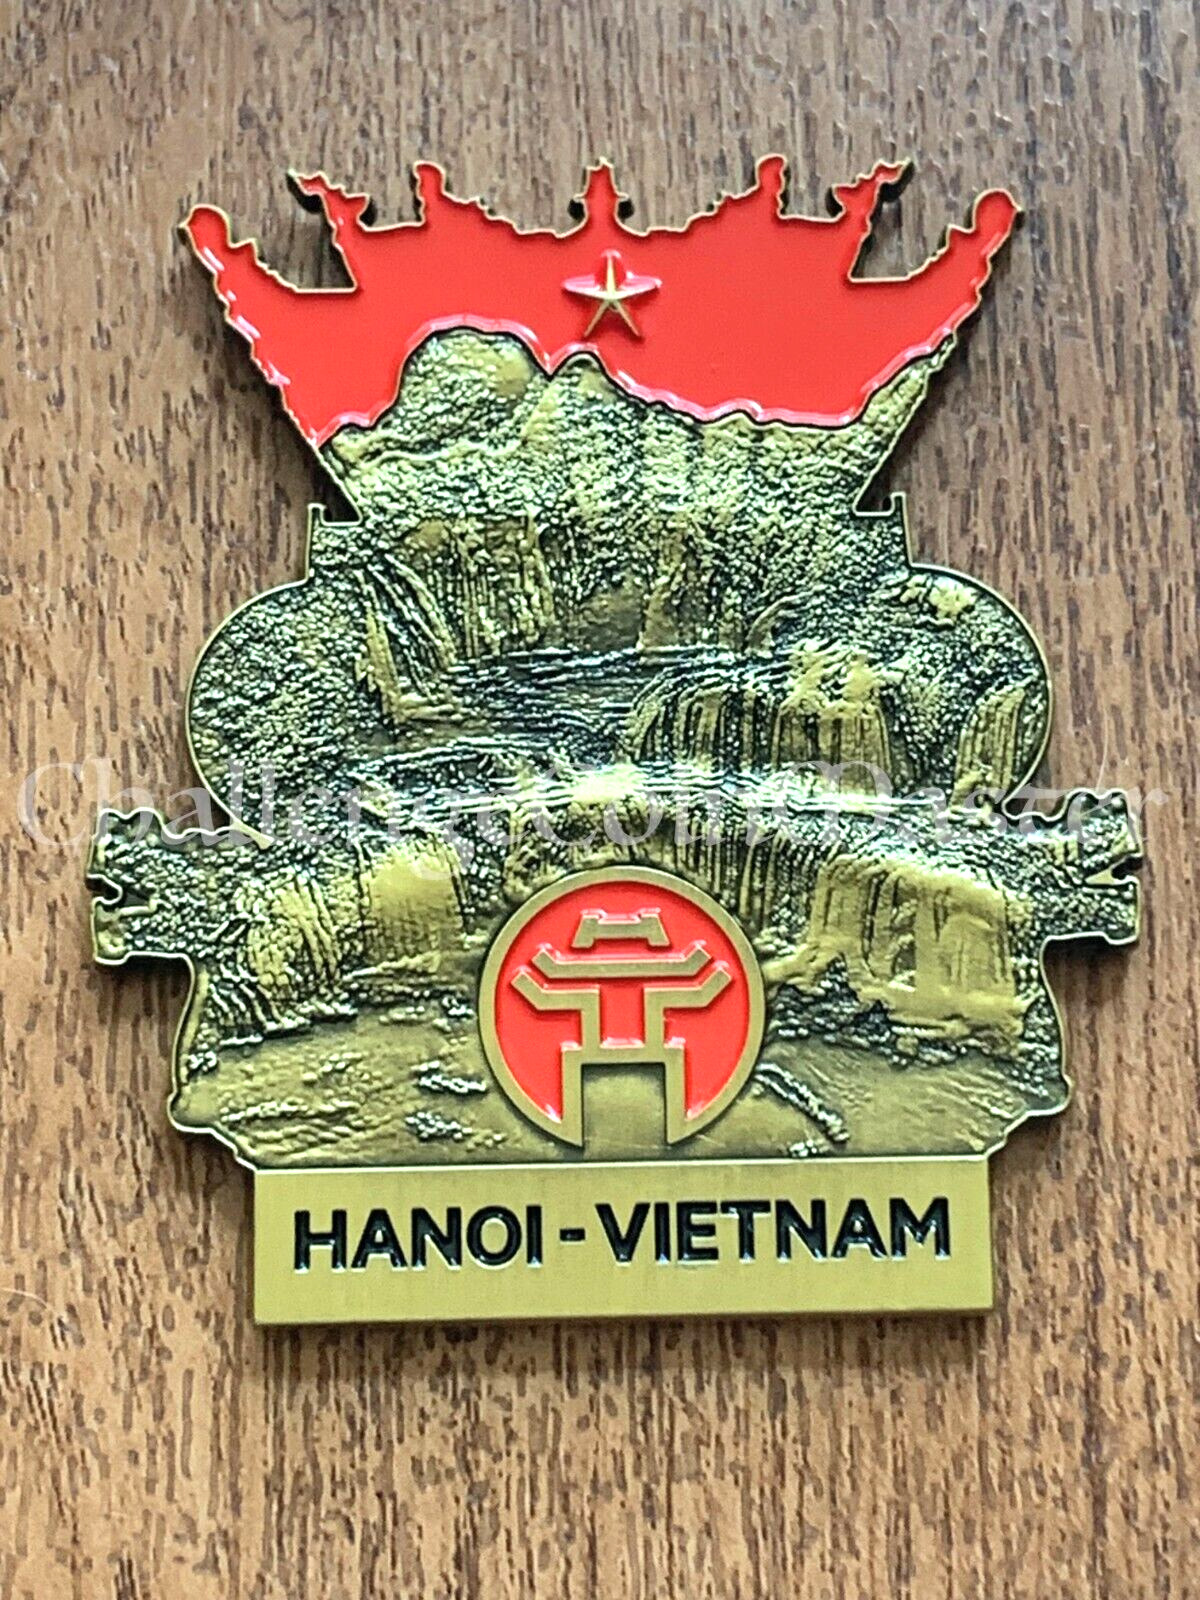 E88 MARINE SECURITY GUARD DETACHMENT HANOI VIETNAM CHALLENGE COIN